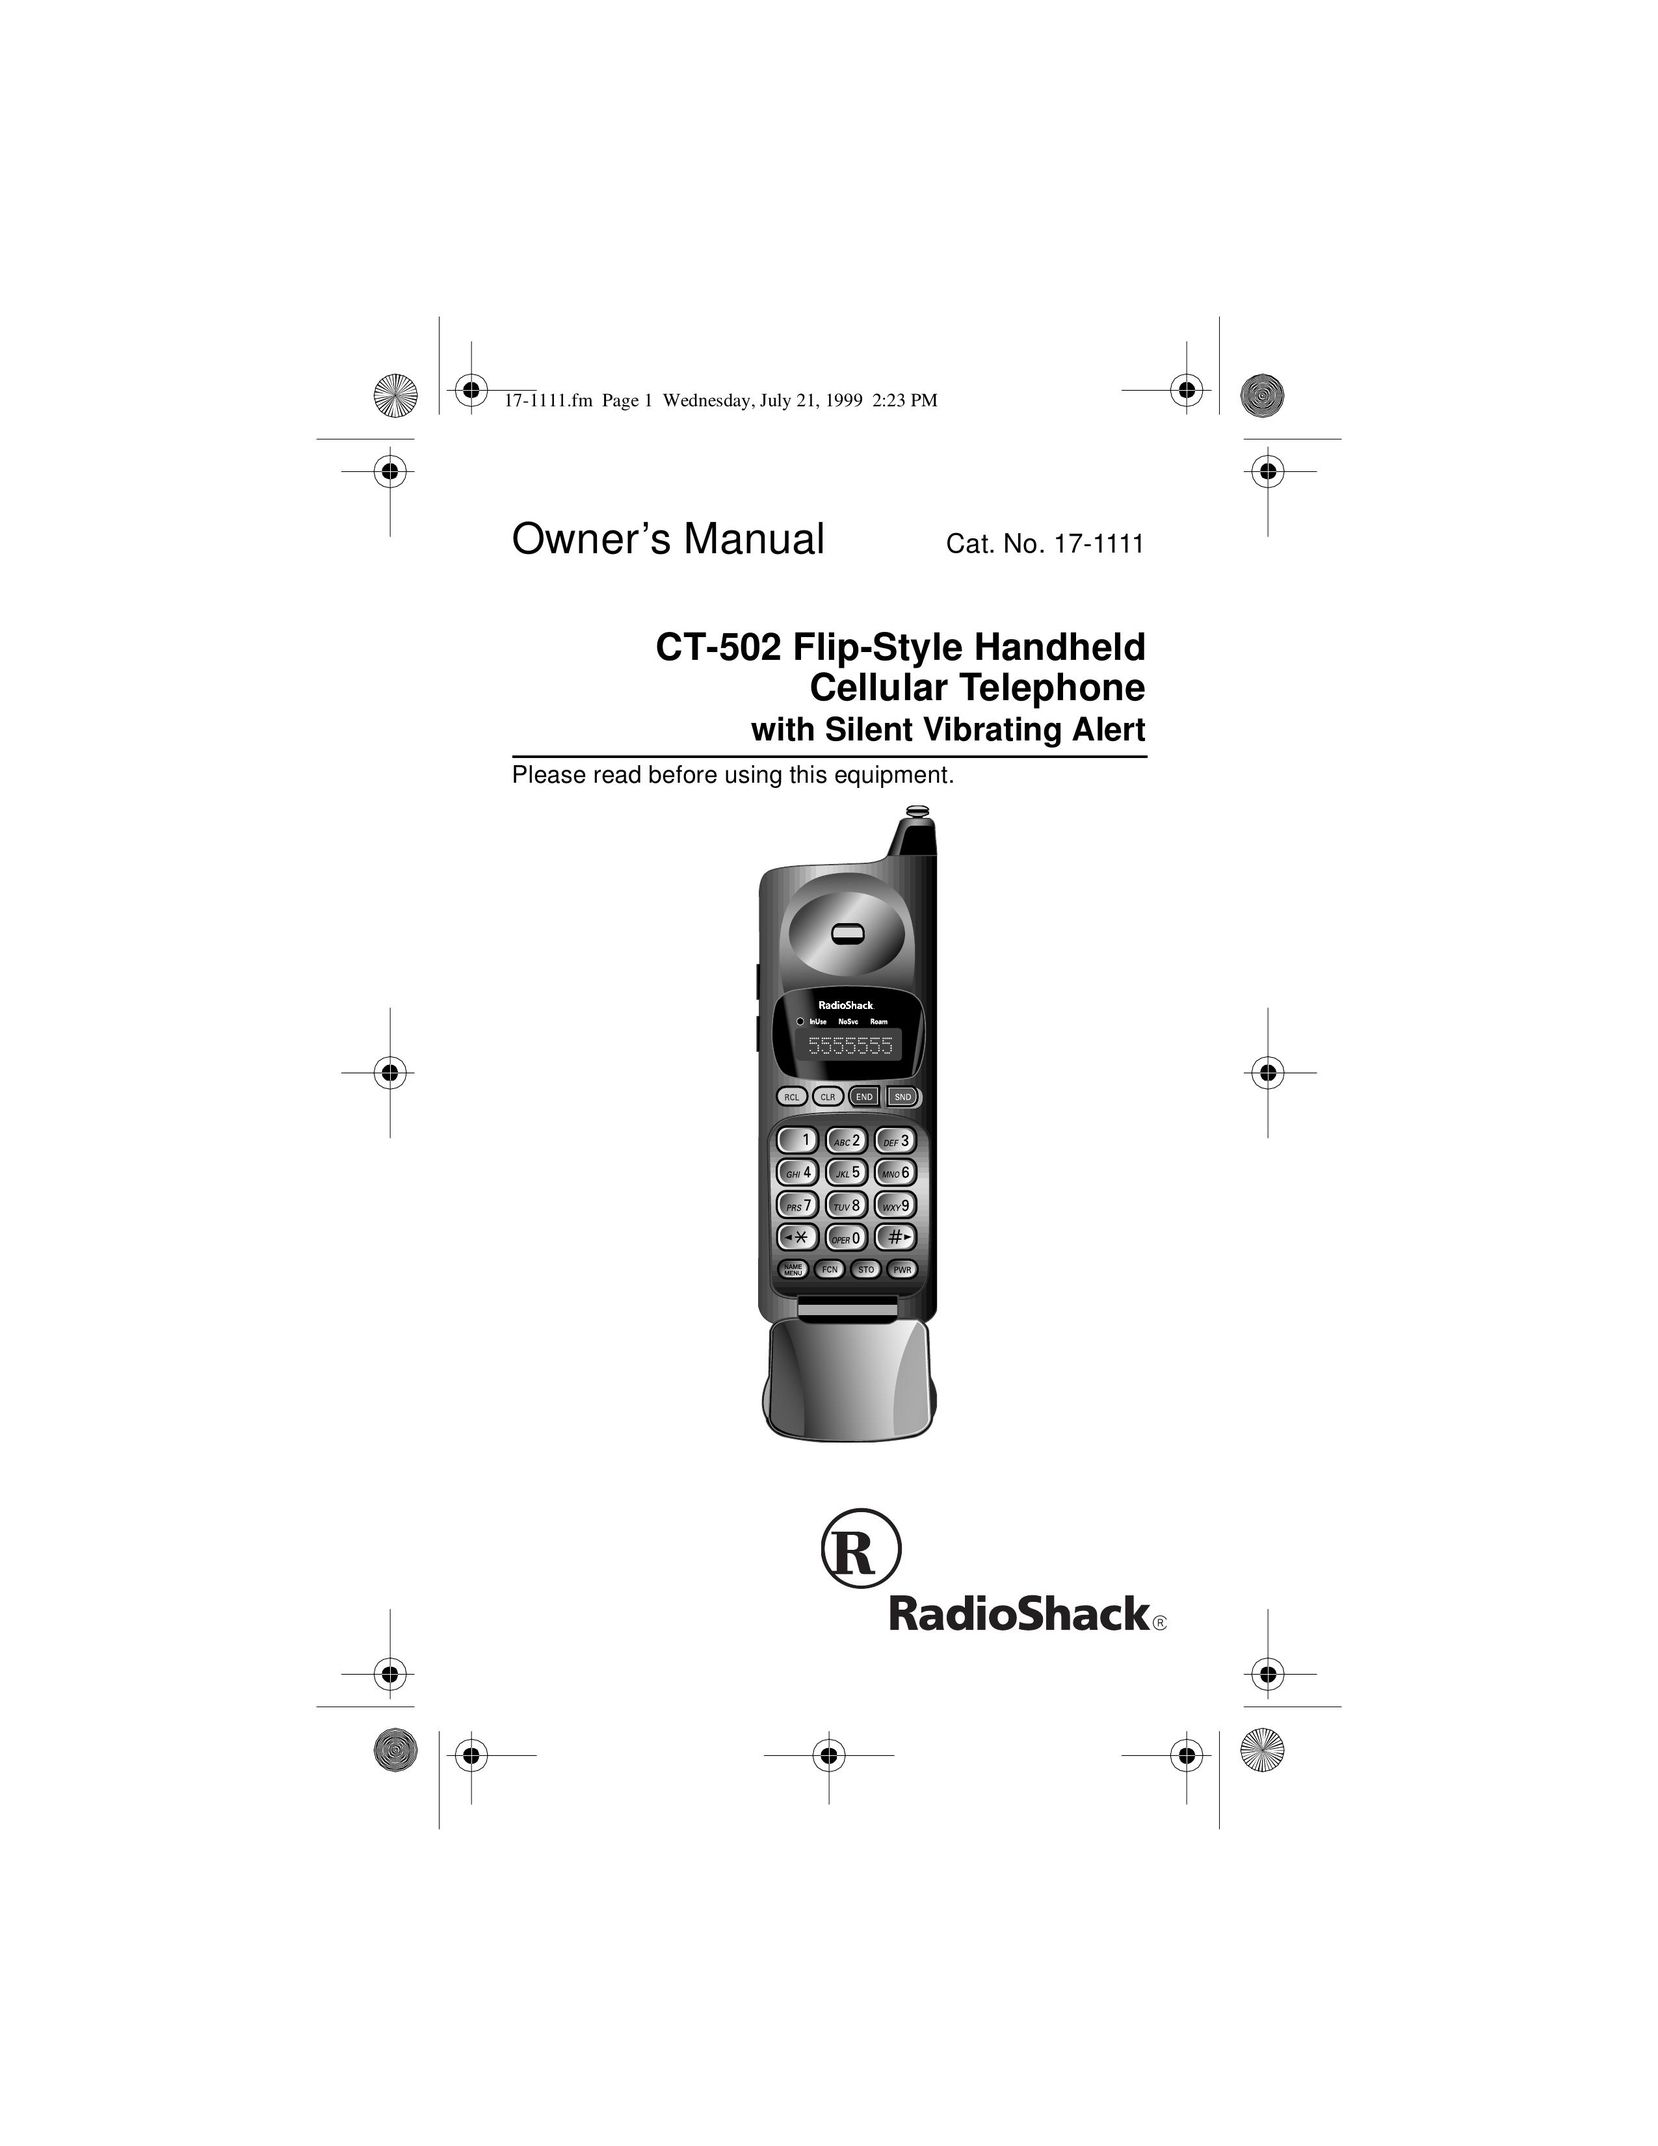 Radio Shack CT-502 Cell Phone User Manual